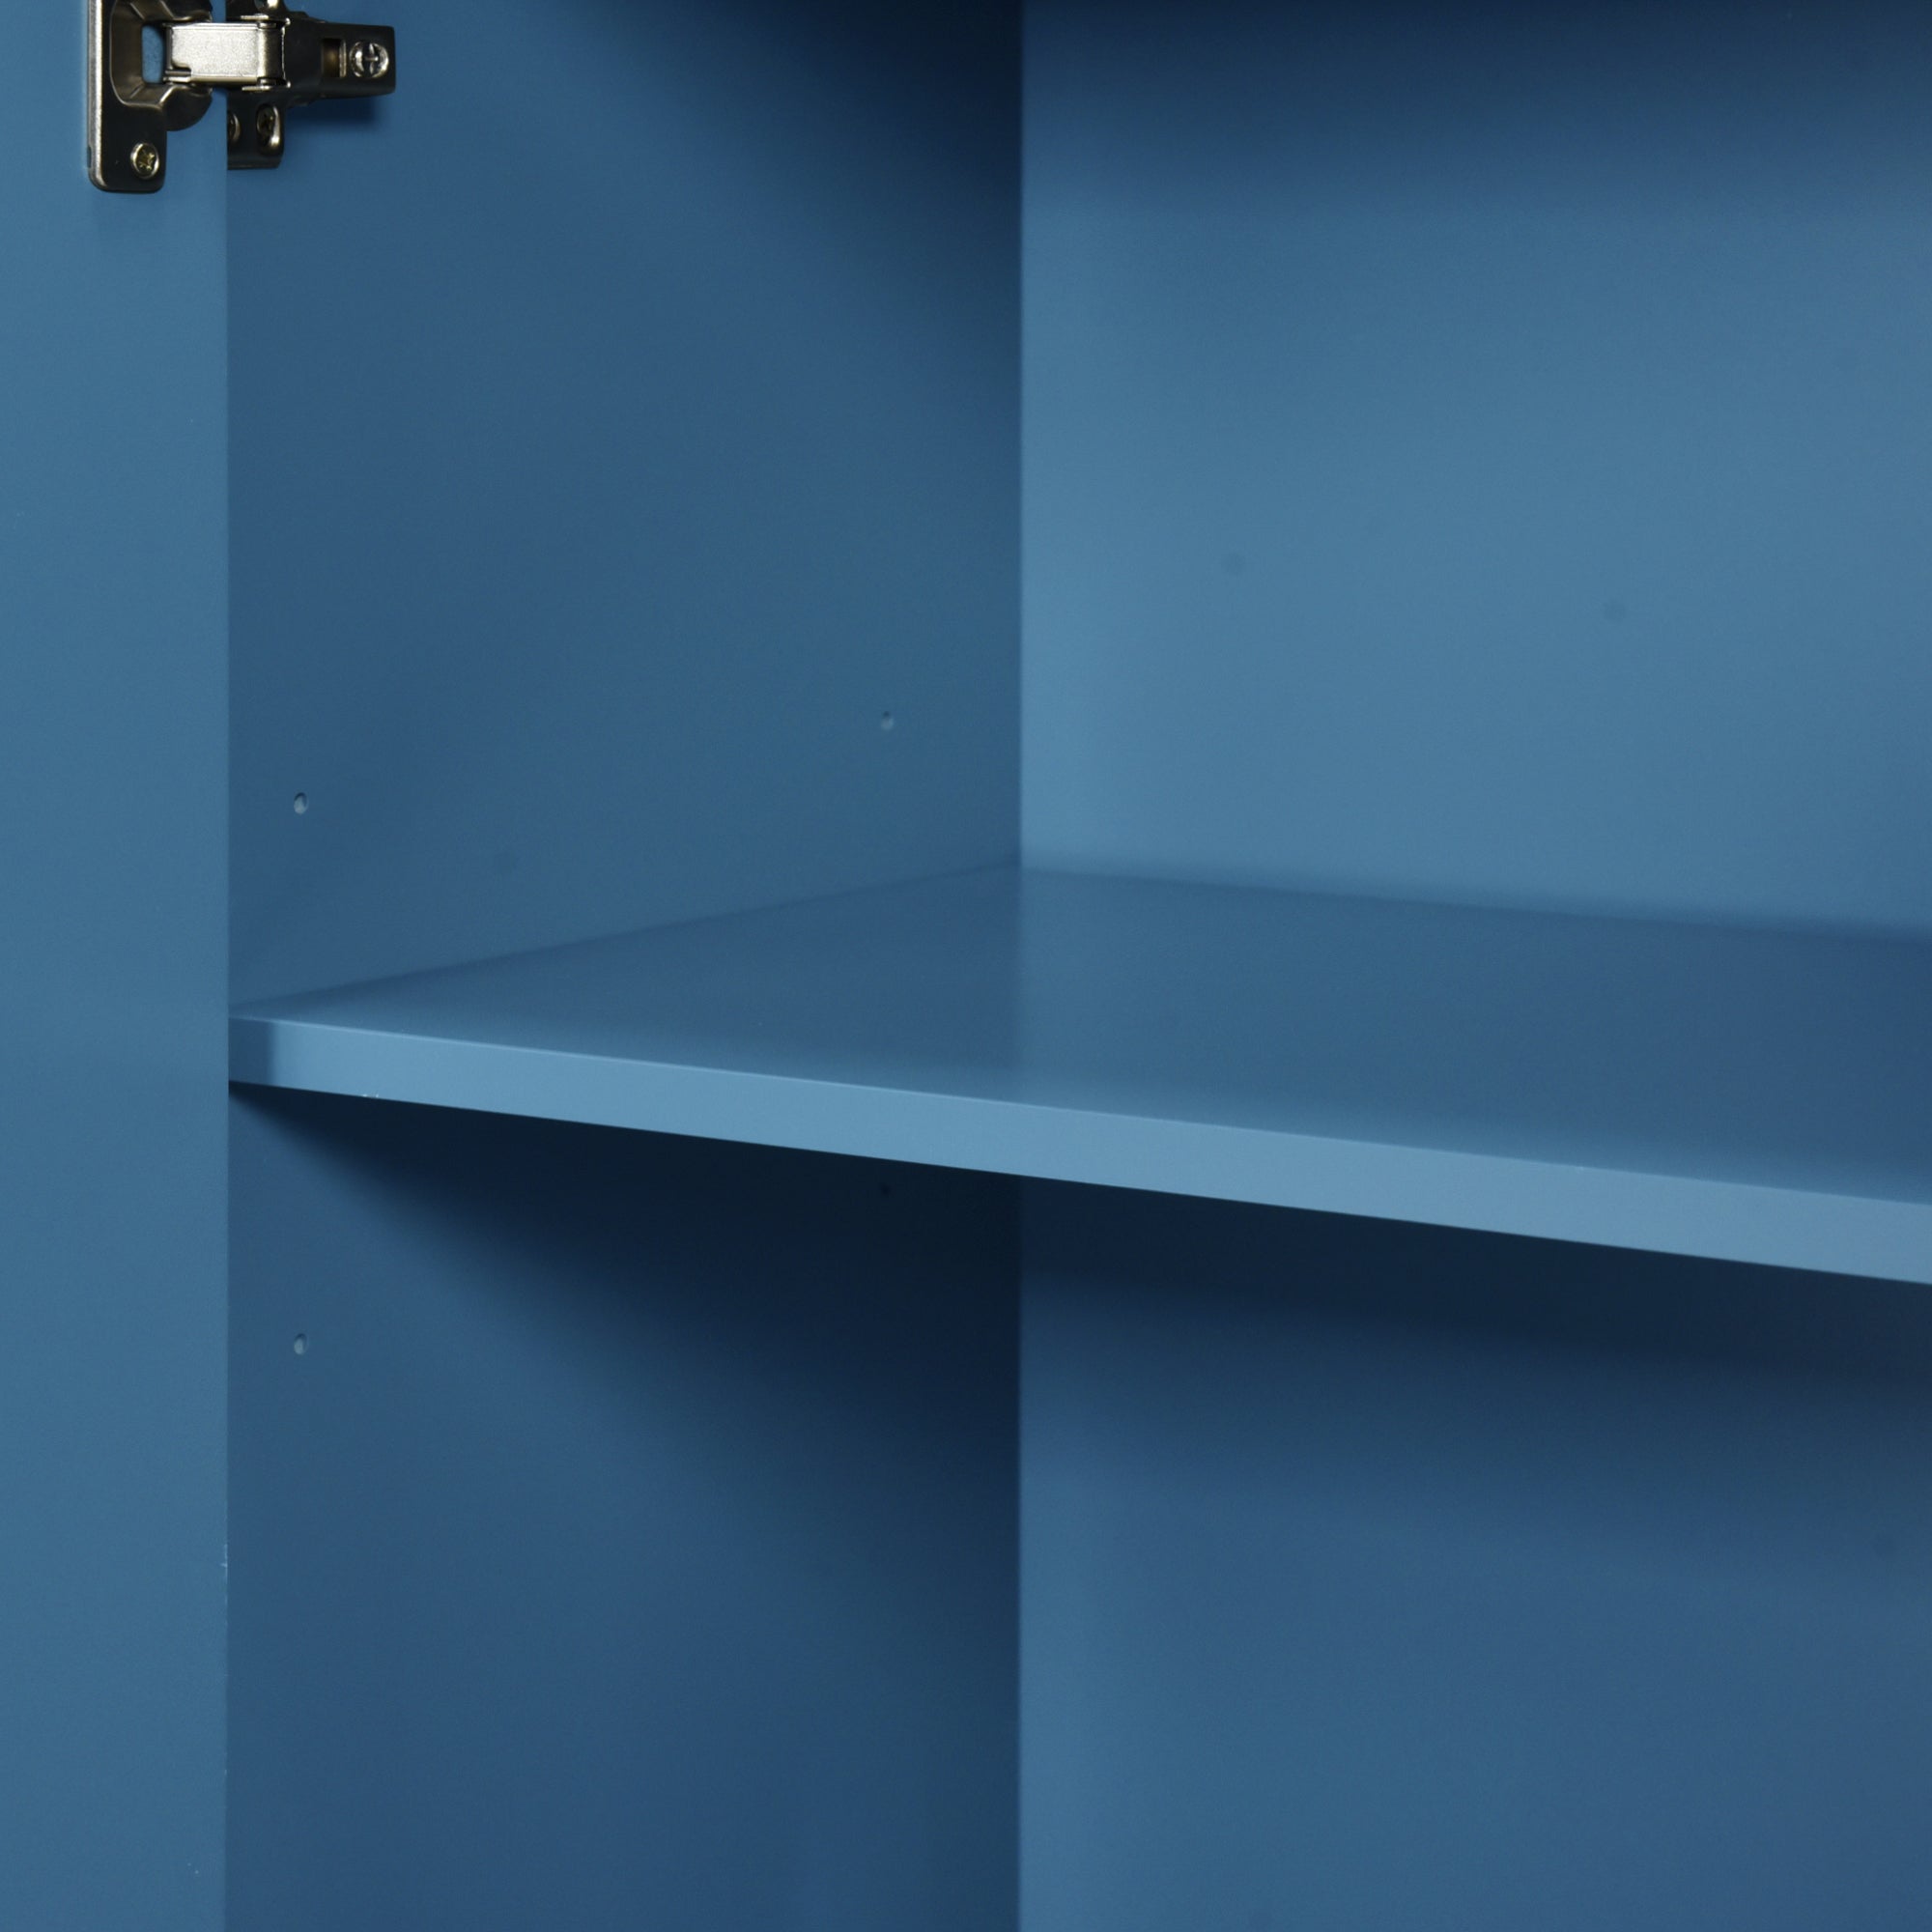 Modern Functional Large Storage Space Sideboard navy blue-mdf